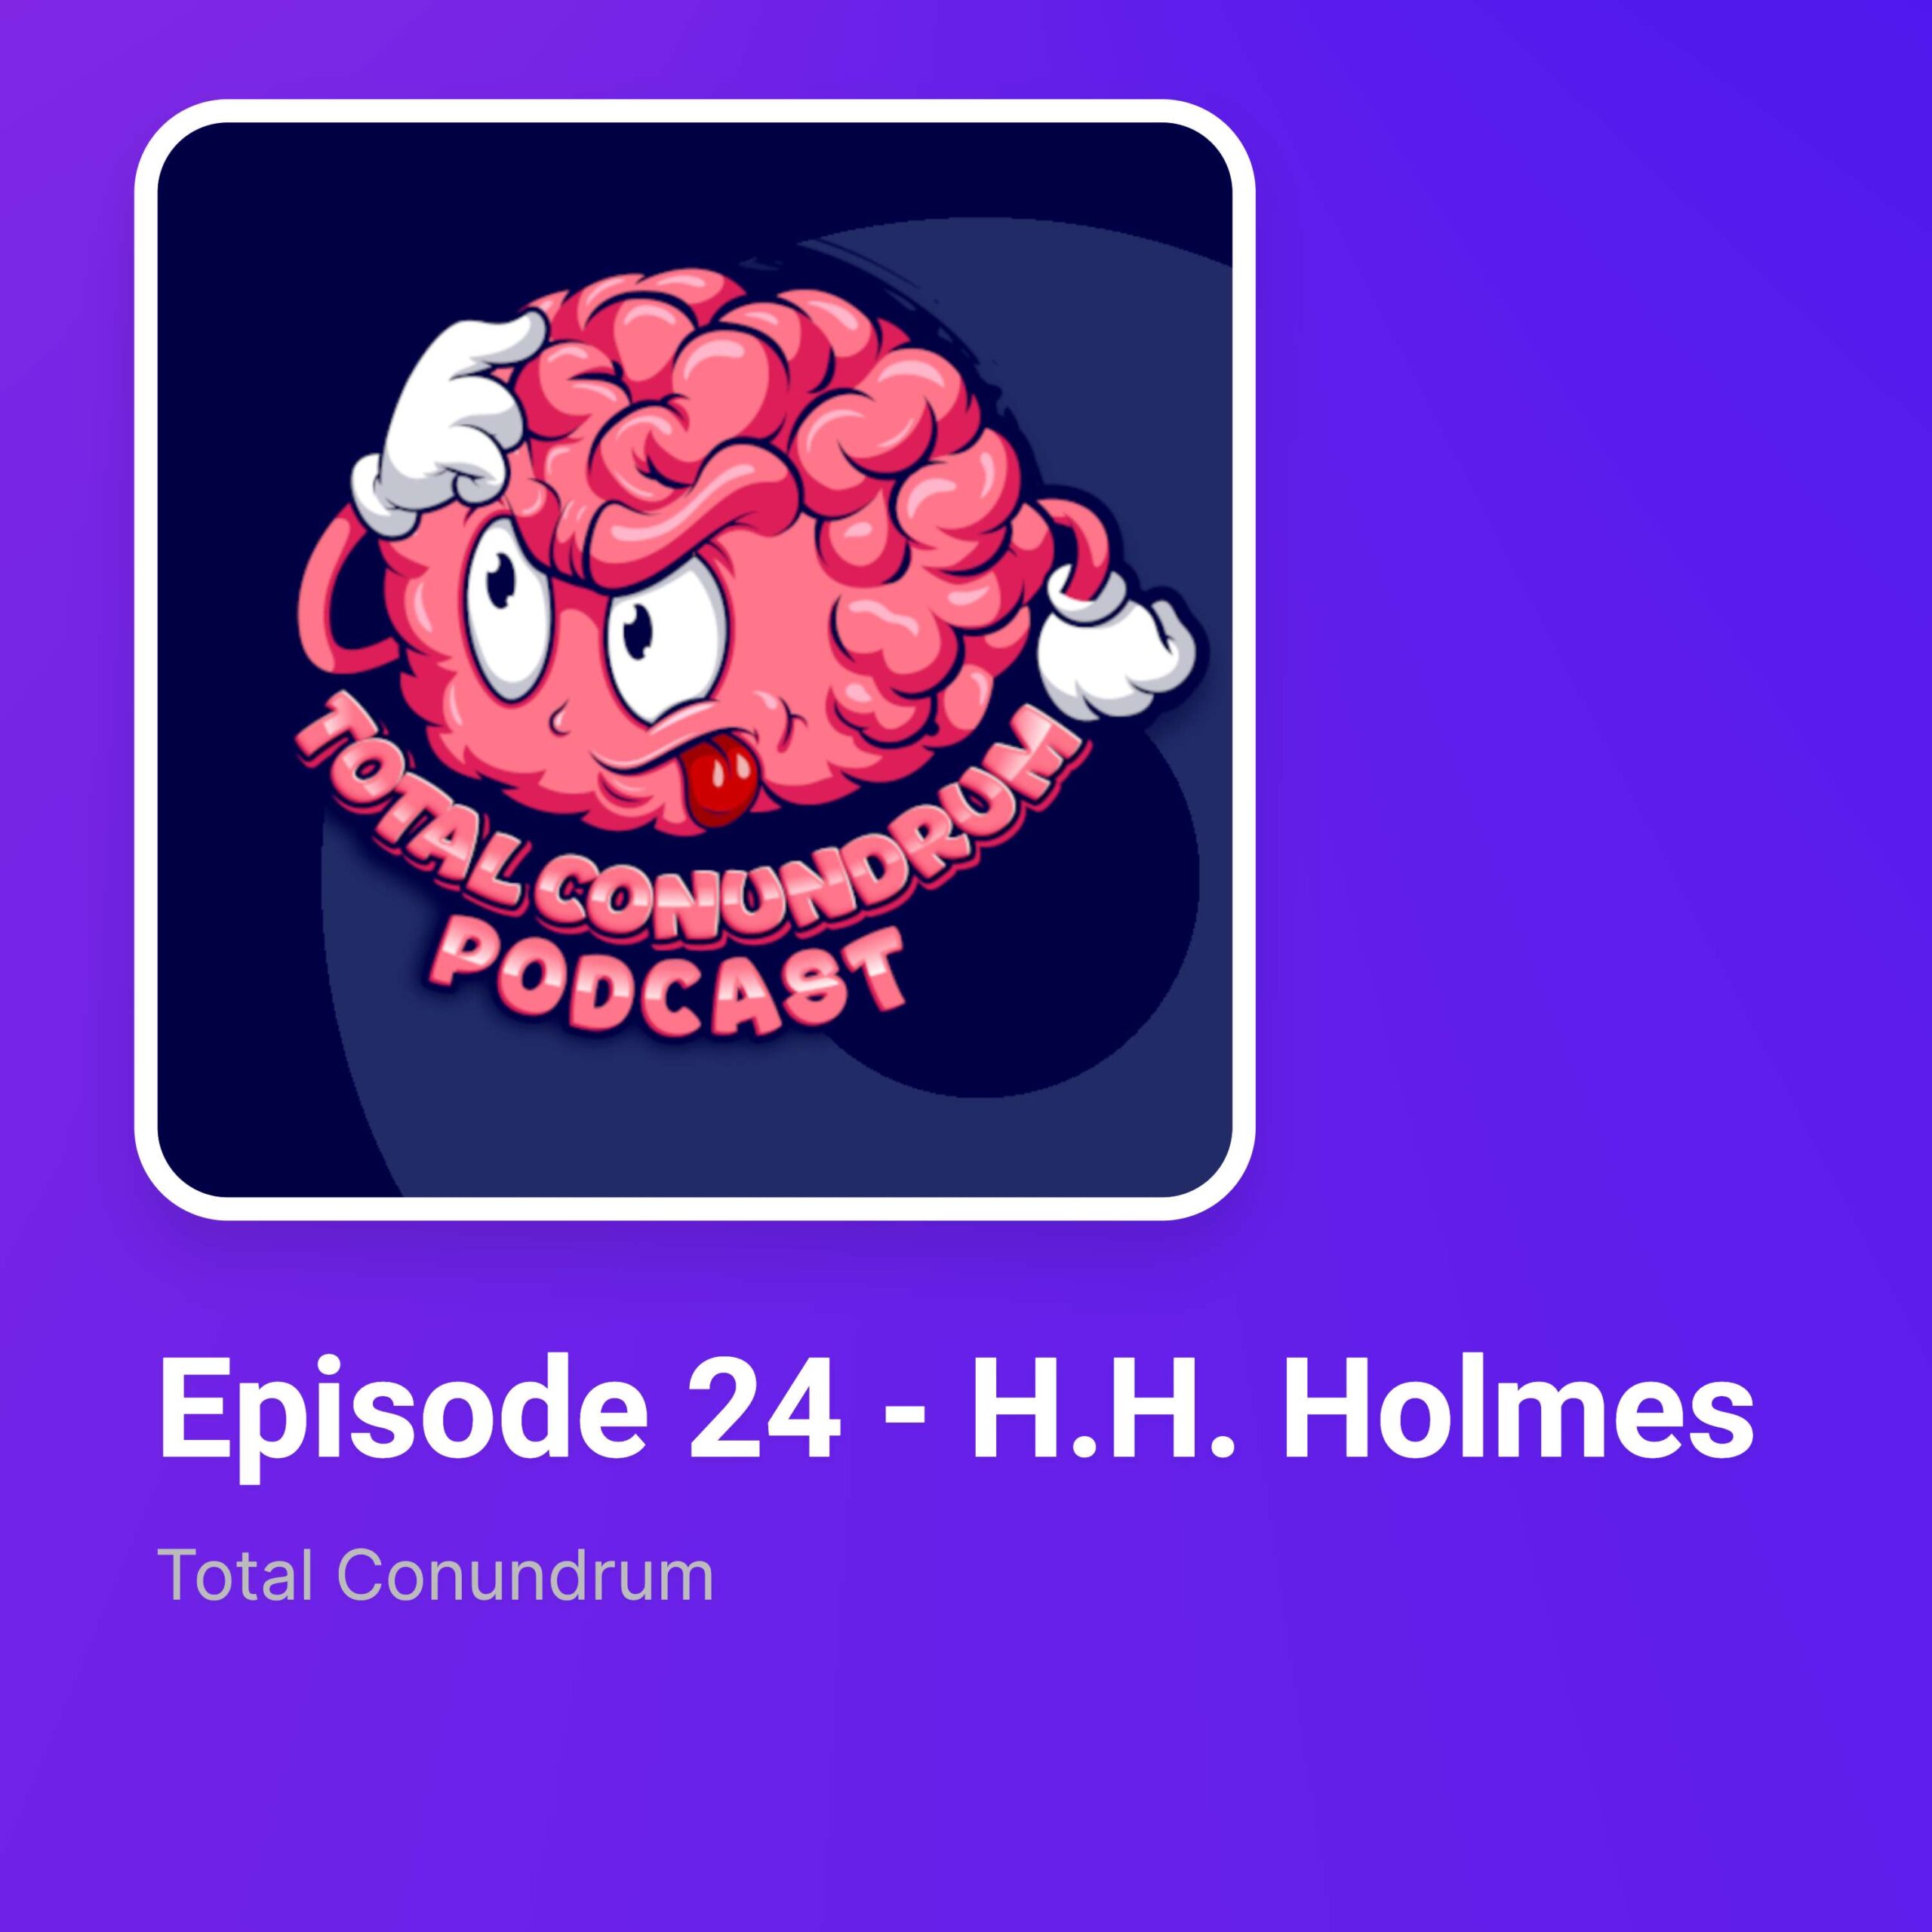 Episode 24 - H.H. Holmes